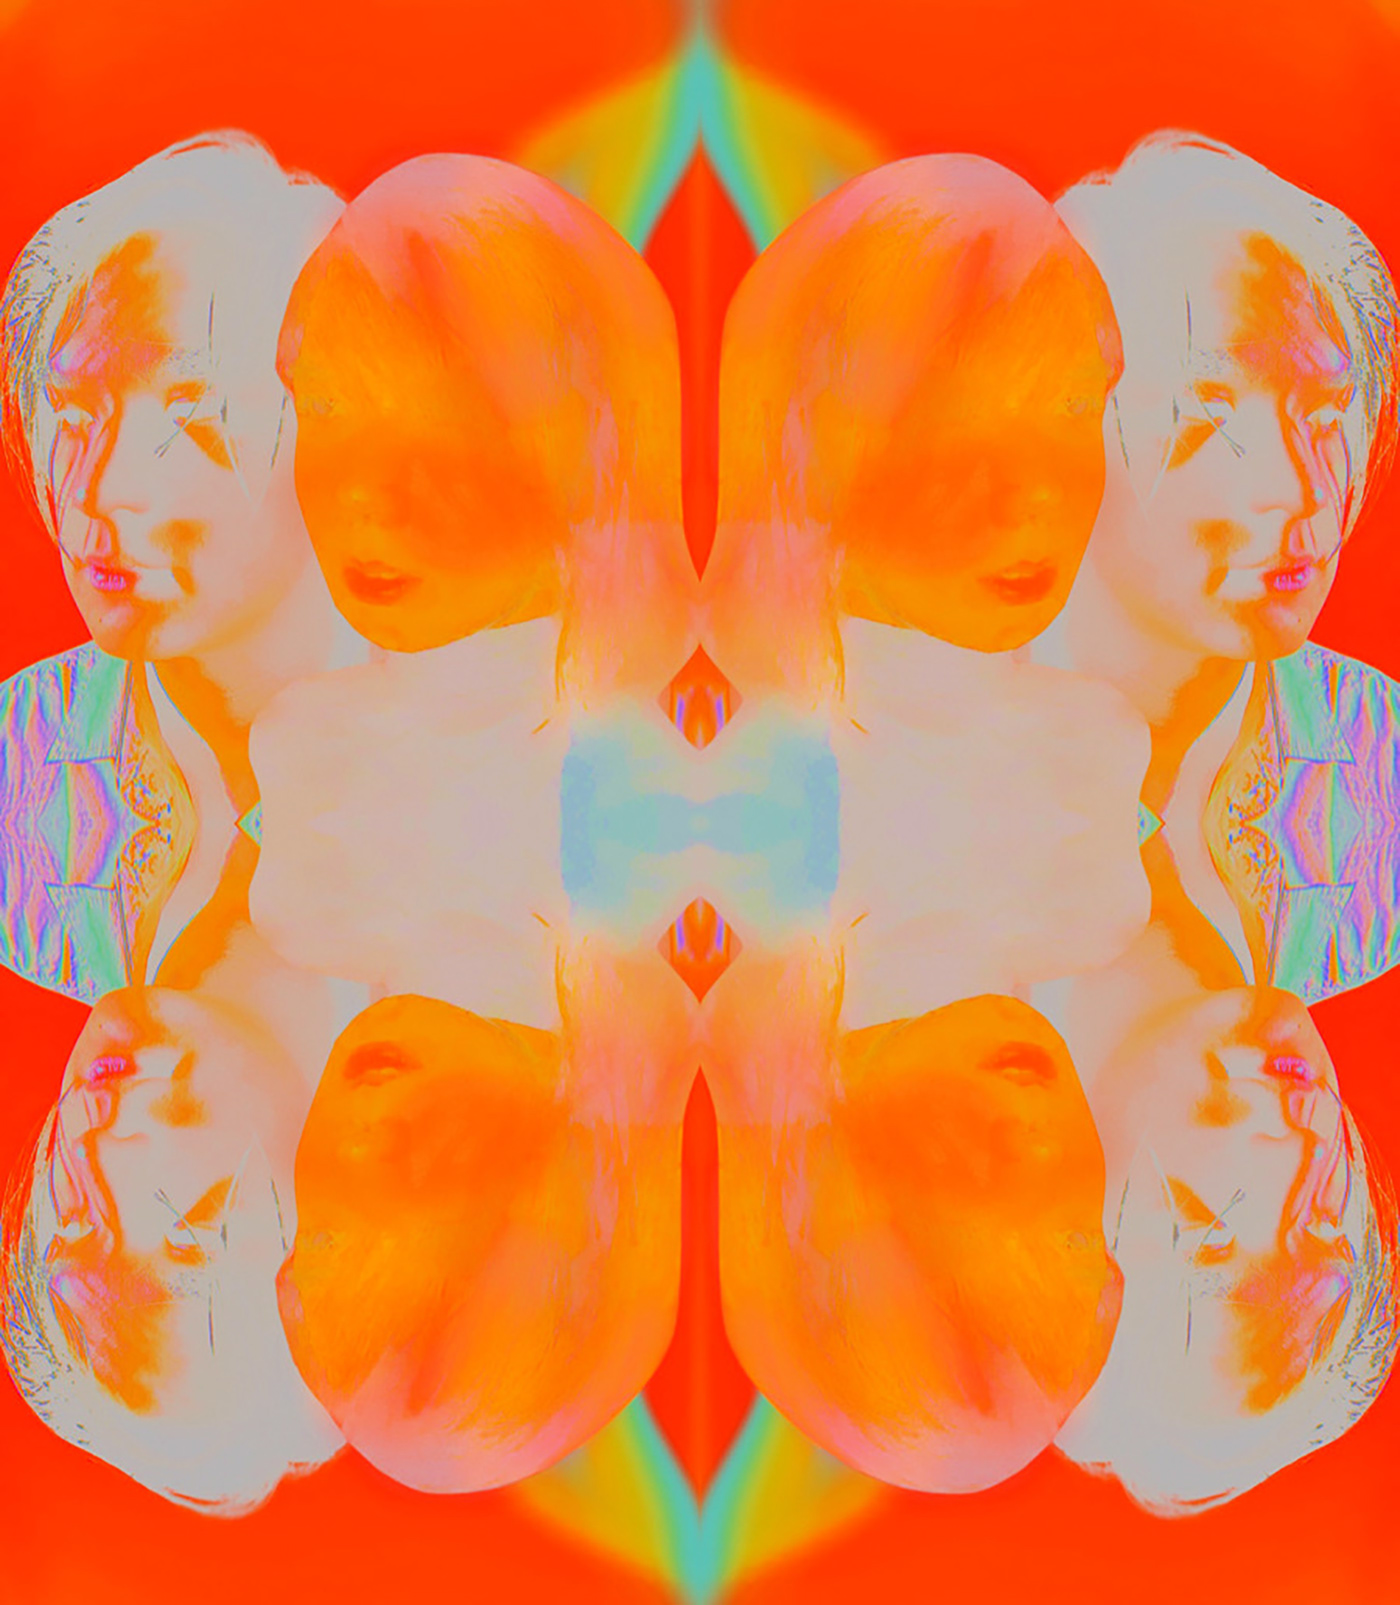 album art album cover collage concept art Digital Art  psychedelic trippy art